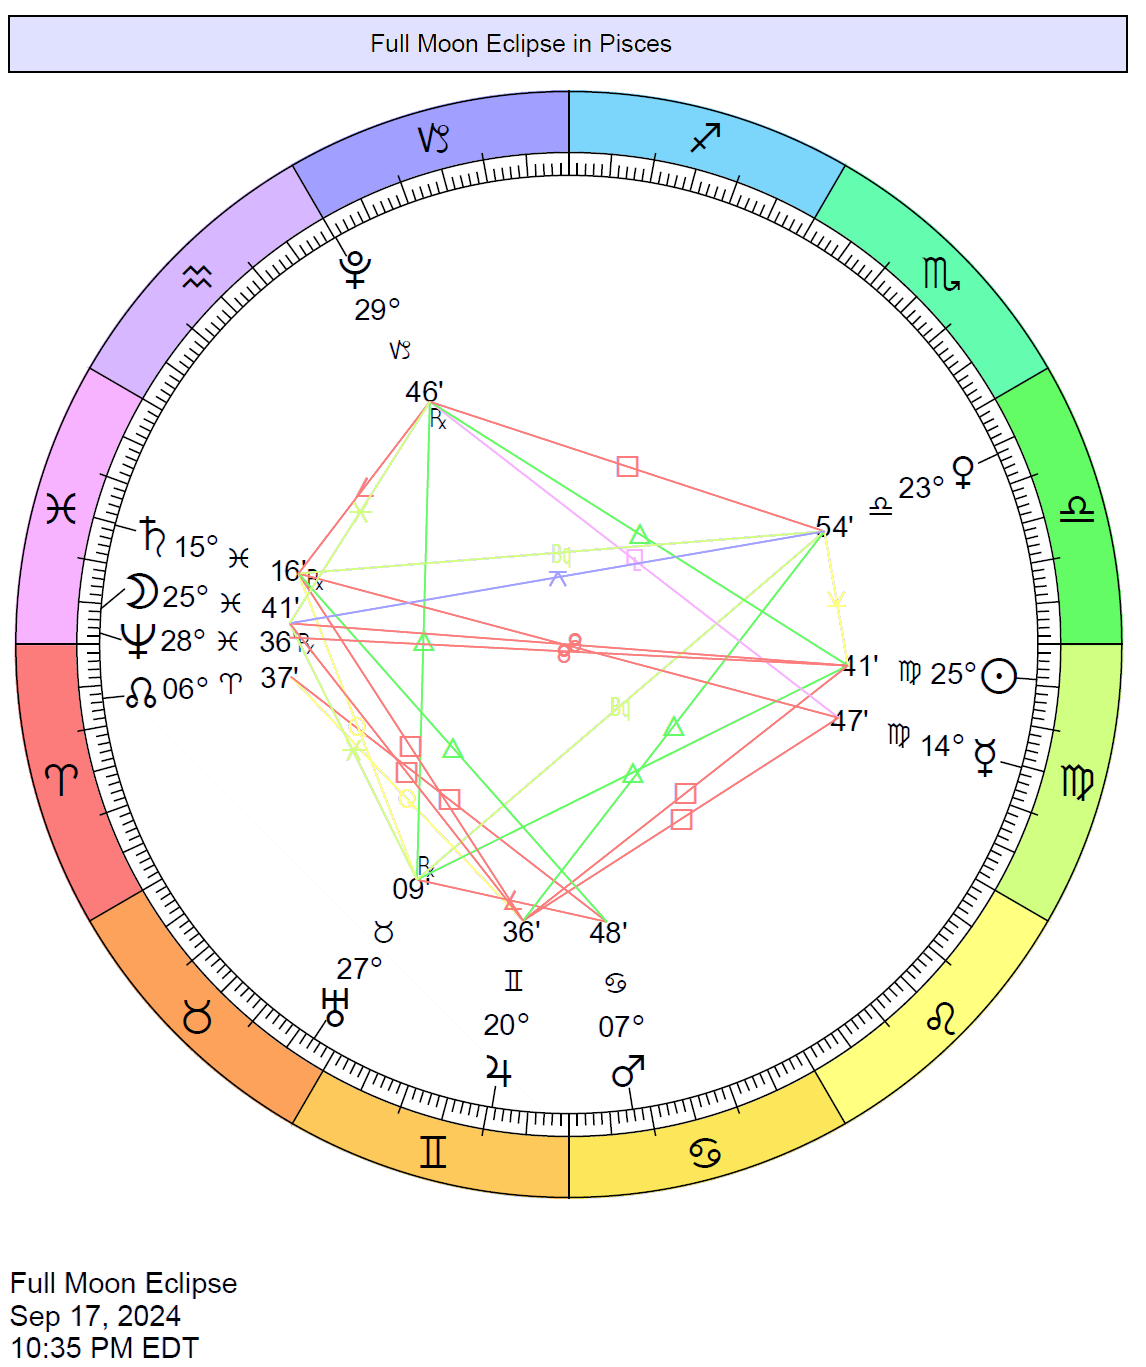 Full Moon Feb 2024 Astrology - Wini Amandie